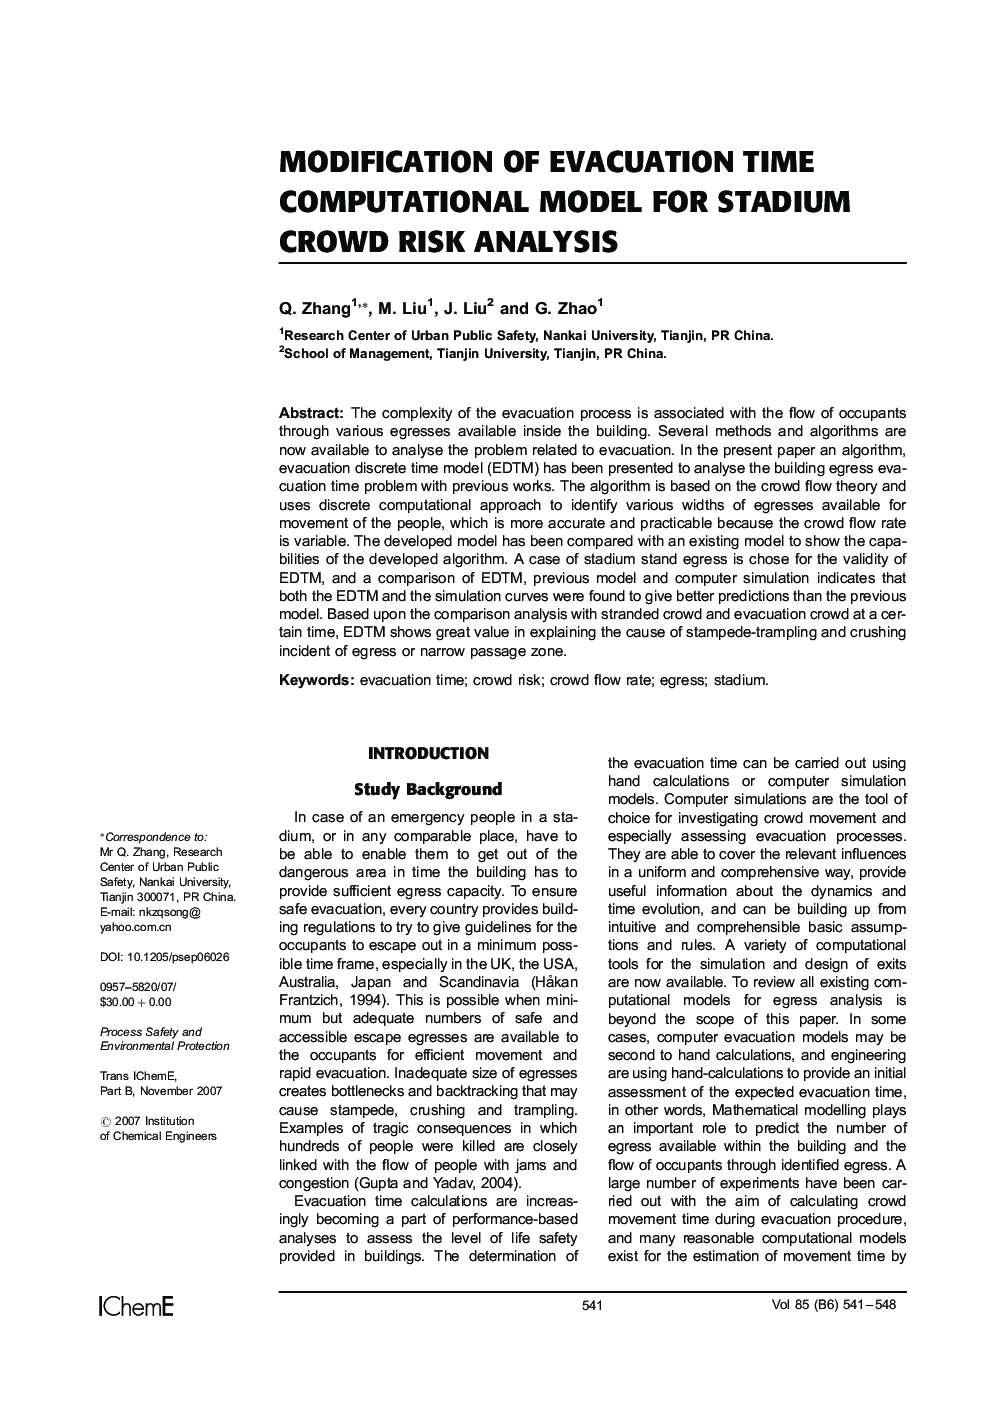 Modification of Evacuation Time Computational Model for Stadium Crowd Risk Analysis